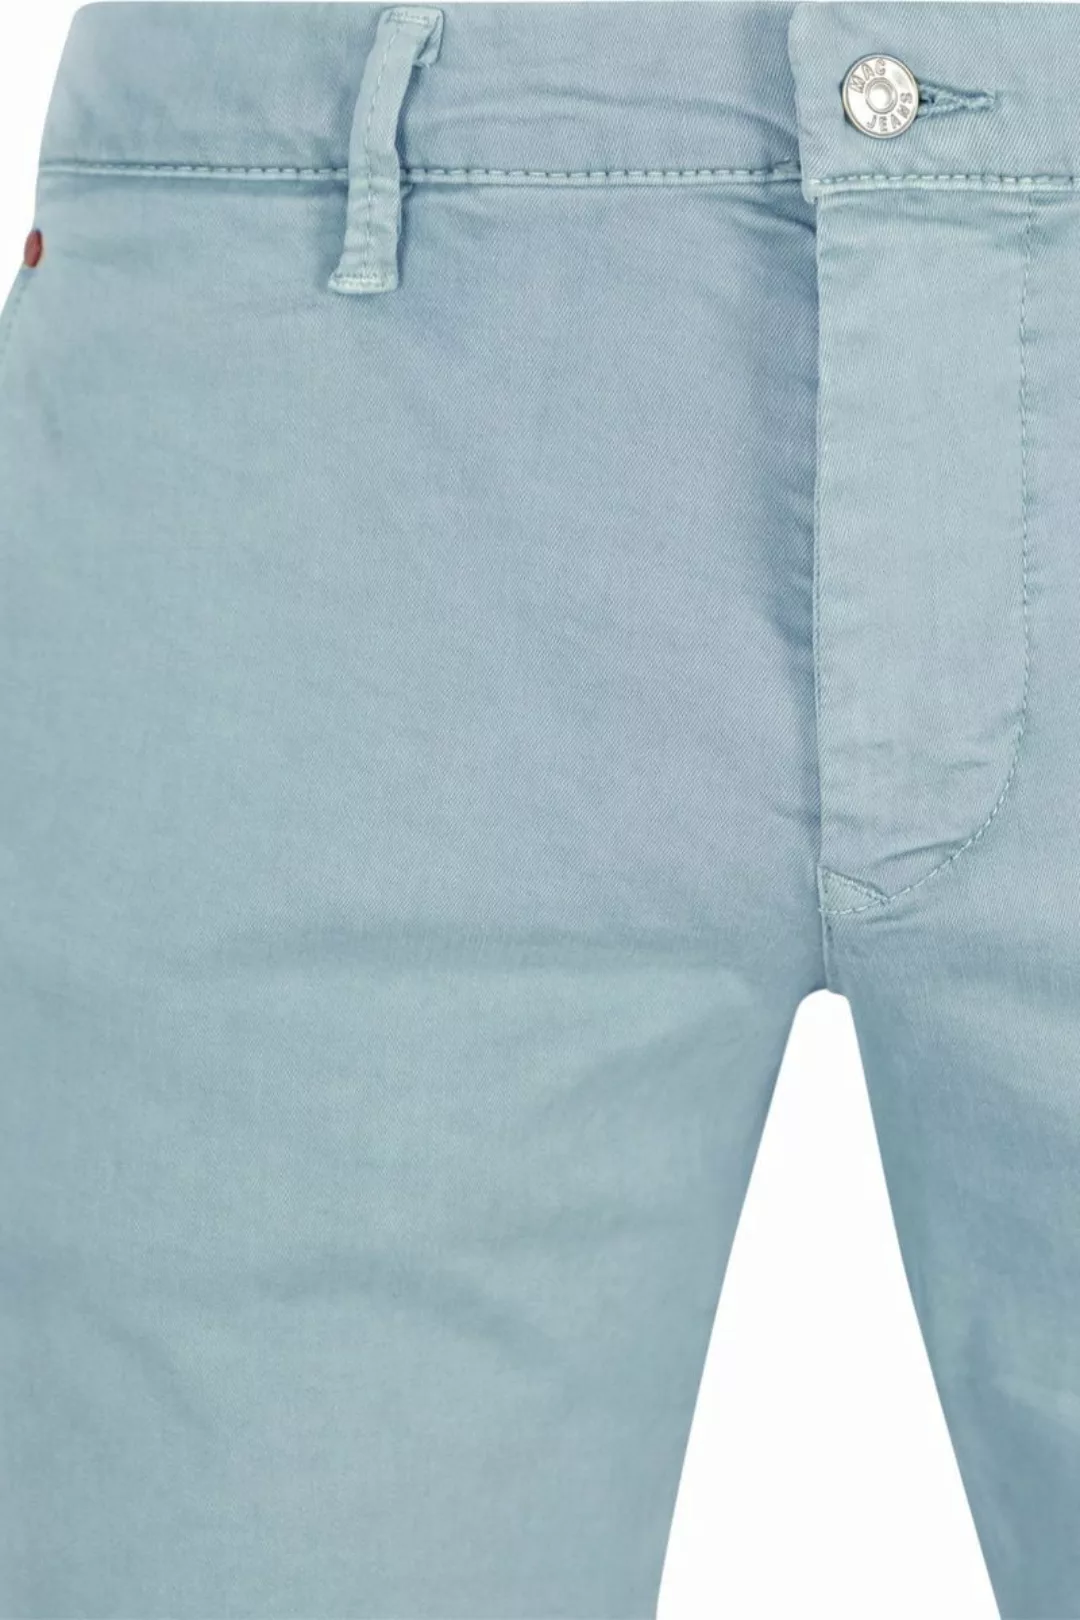 Mac Jeans Driver Pants Hellblau - Größe W 33 - L 34 günstig online kaufen